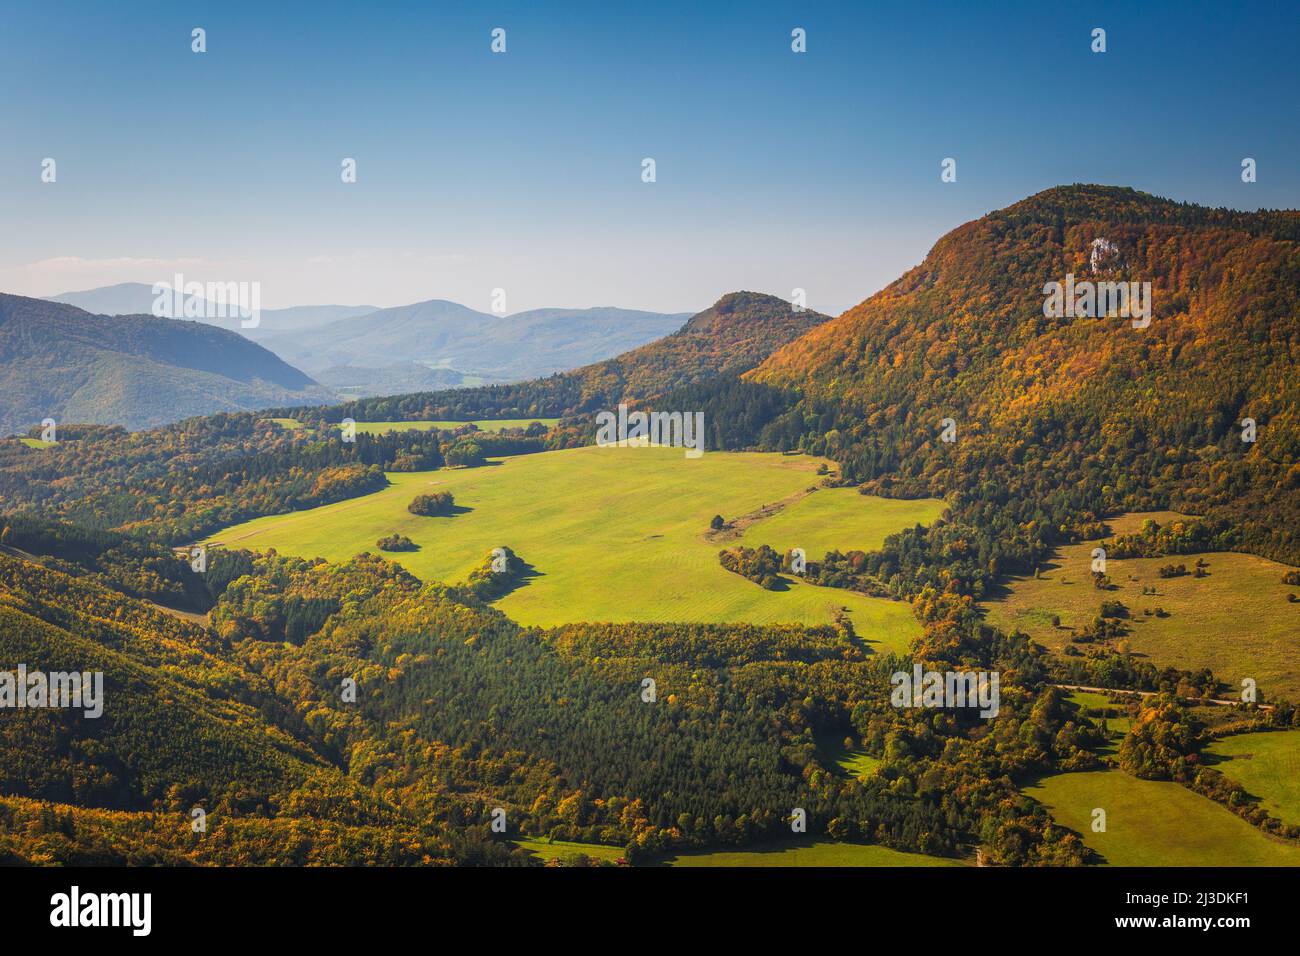 Autumn landscape, The Strazov Mountains in northwestern Slovakia, Europe. Stock Photo